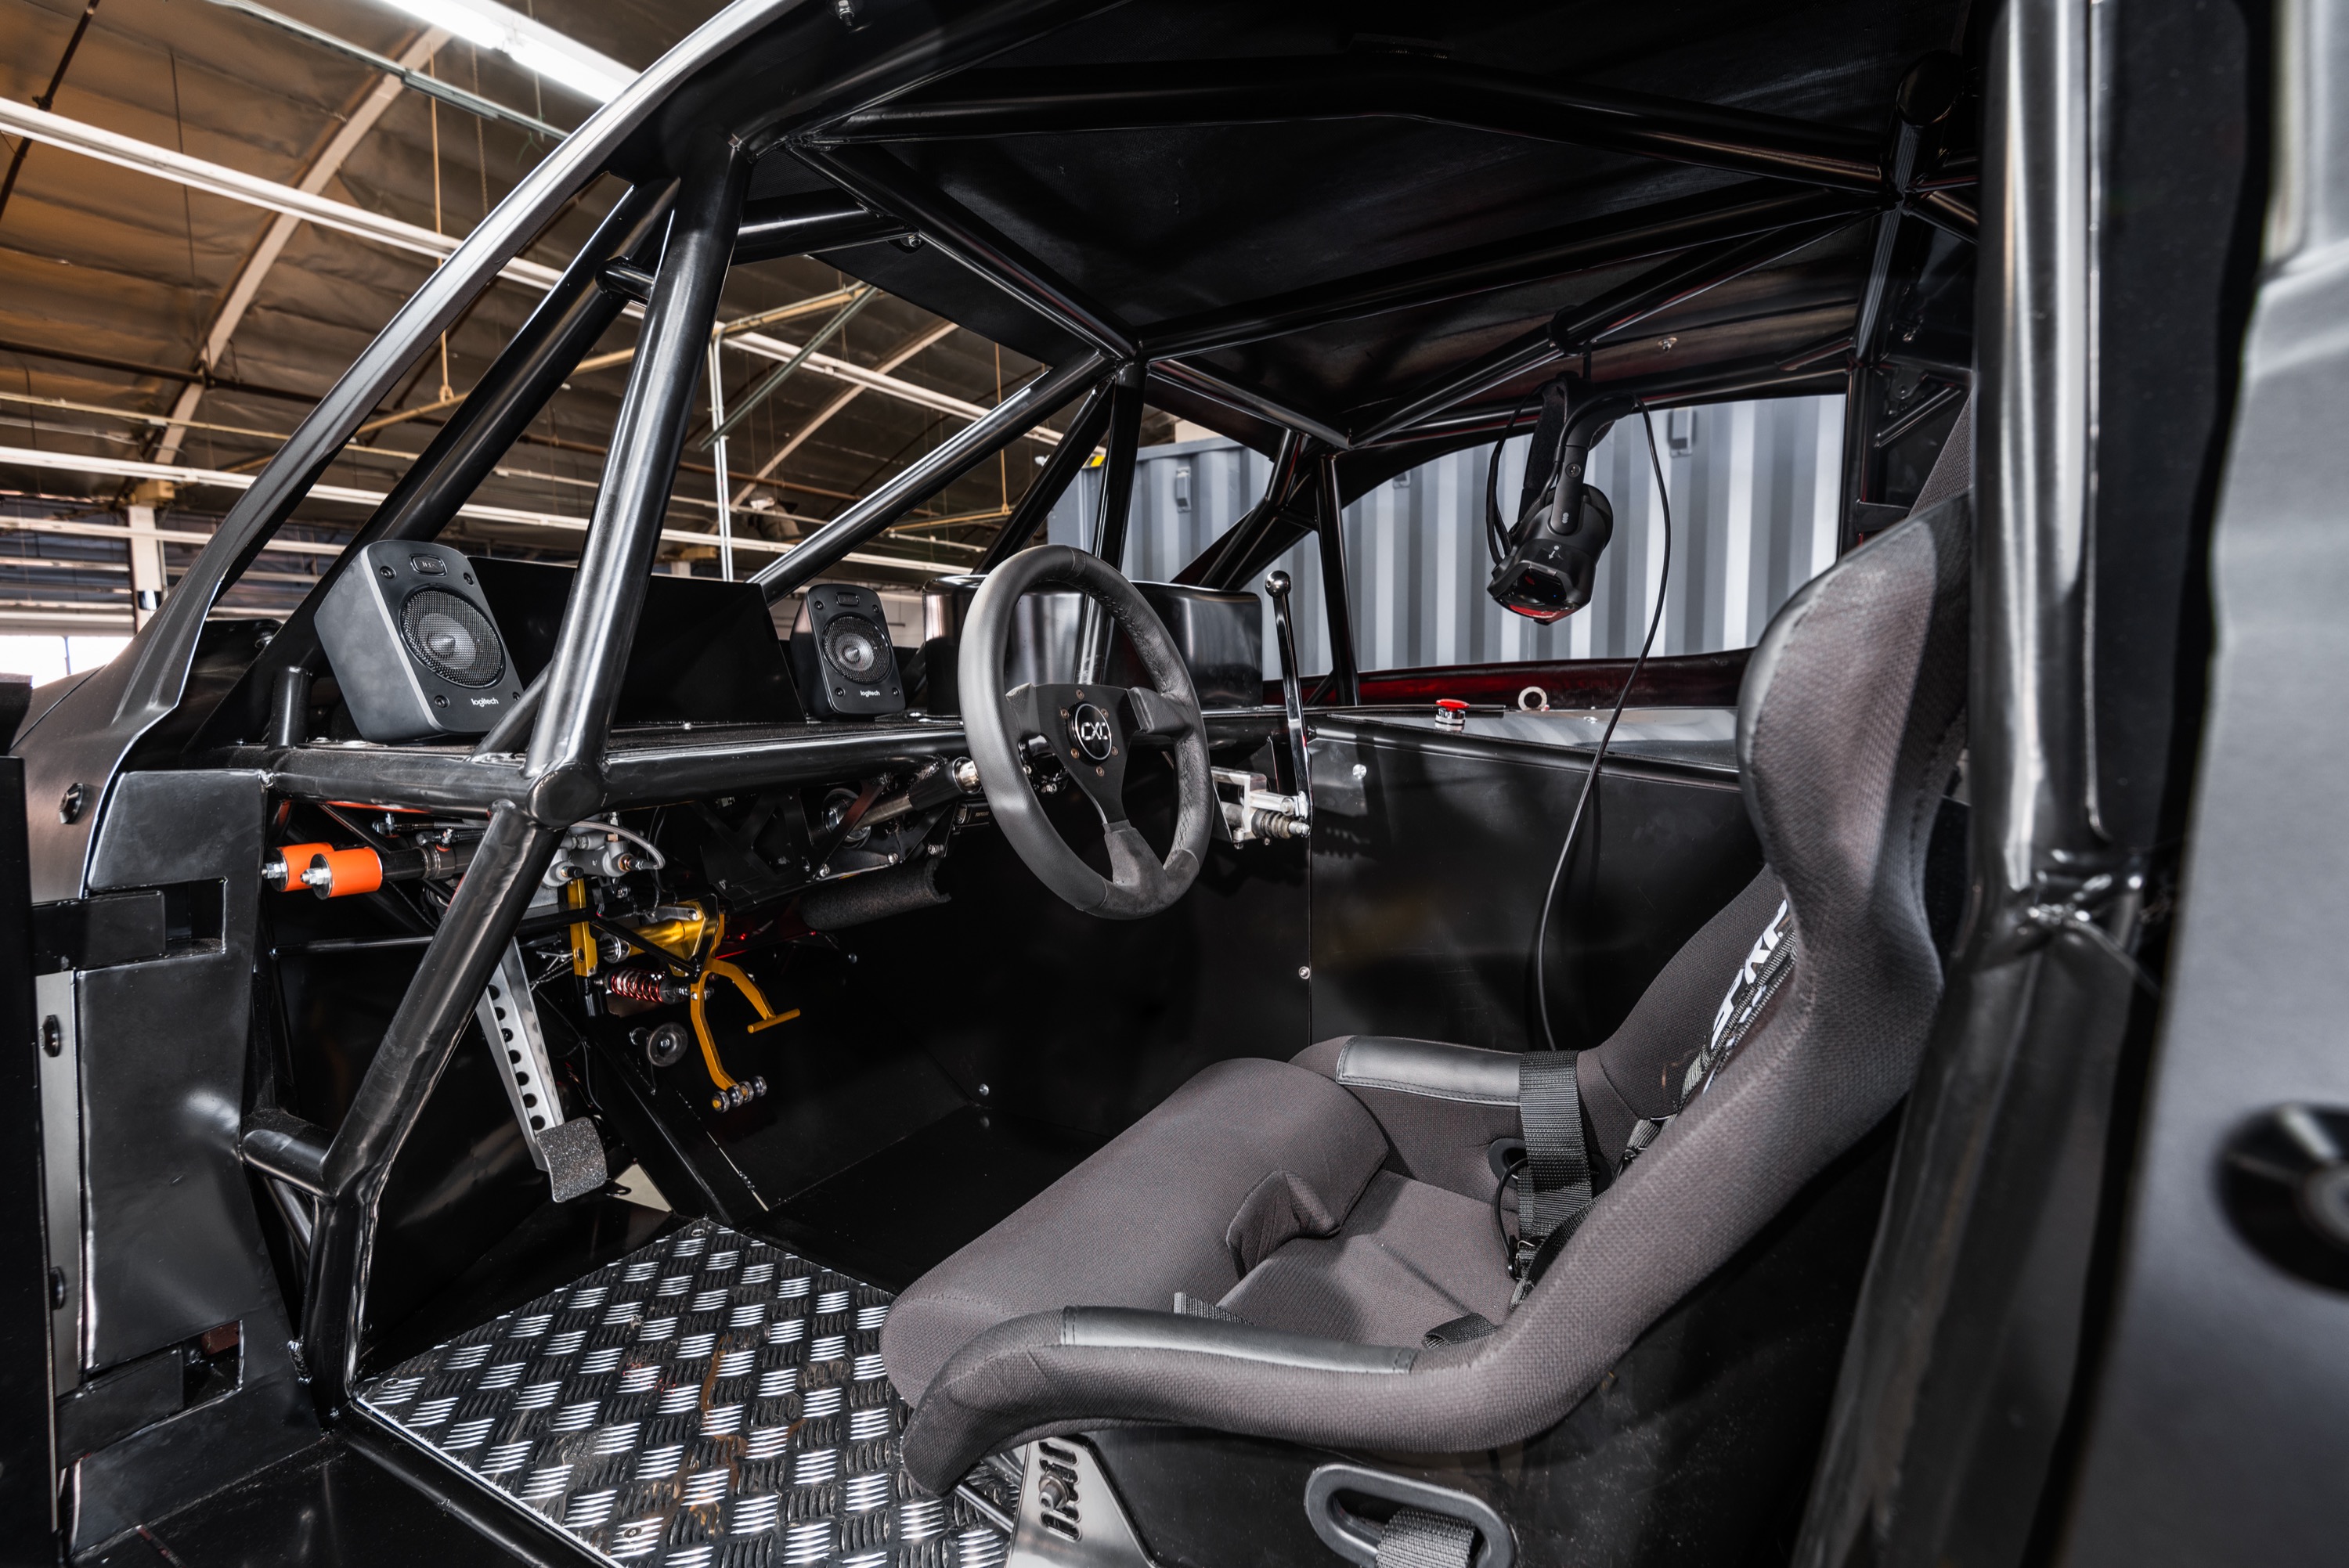 Behind the wheel of CXC’s $600,000 off-road racing simulator